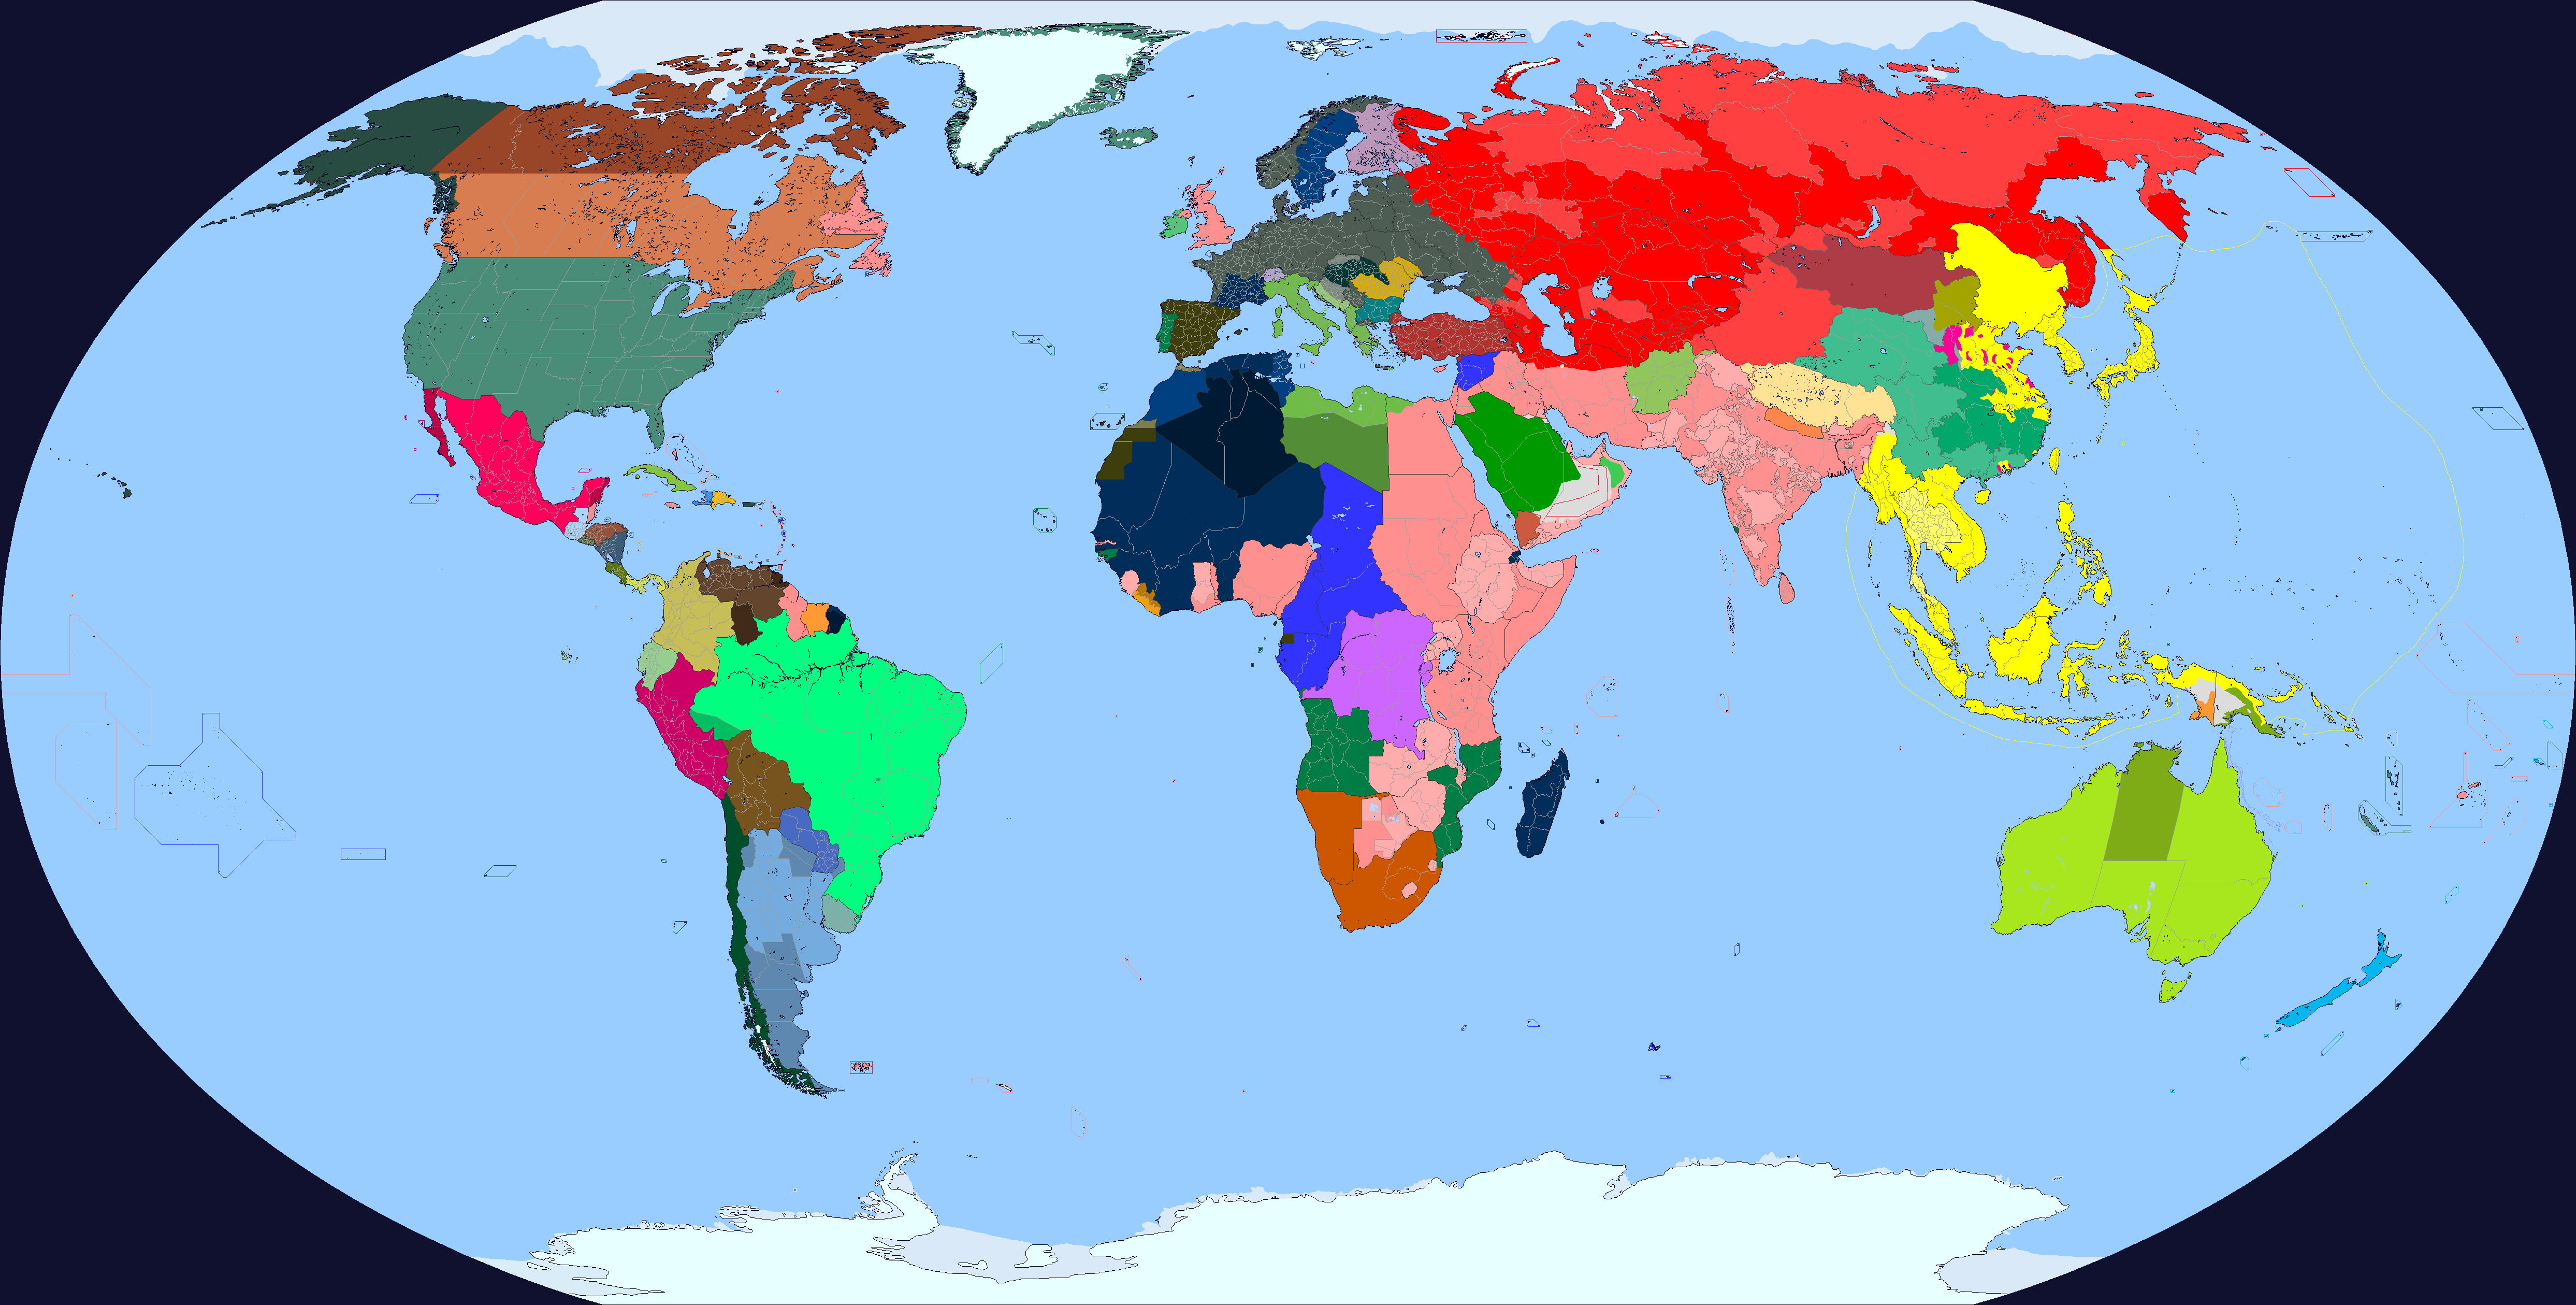 Карта мира на 1936 год